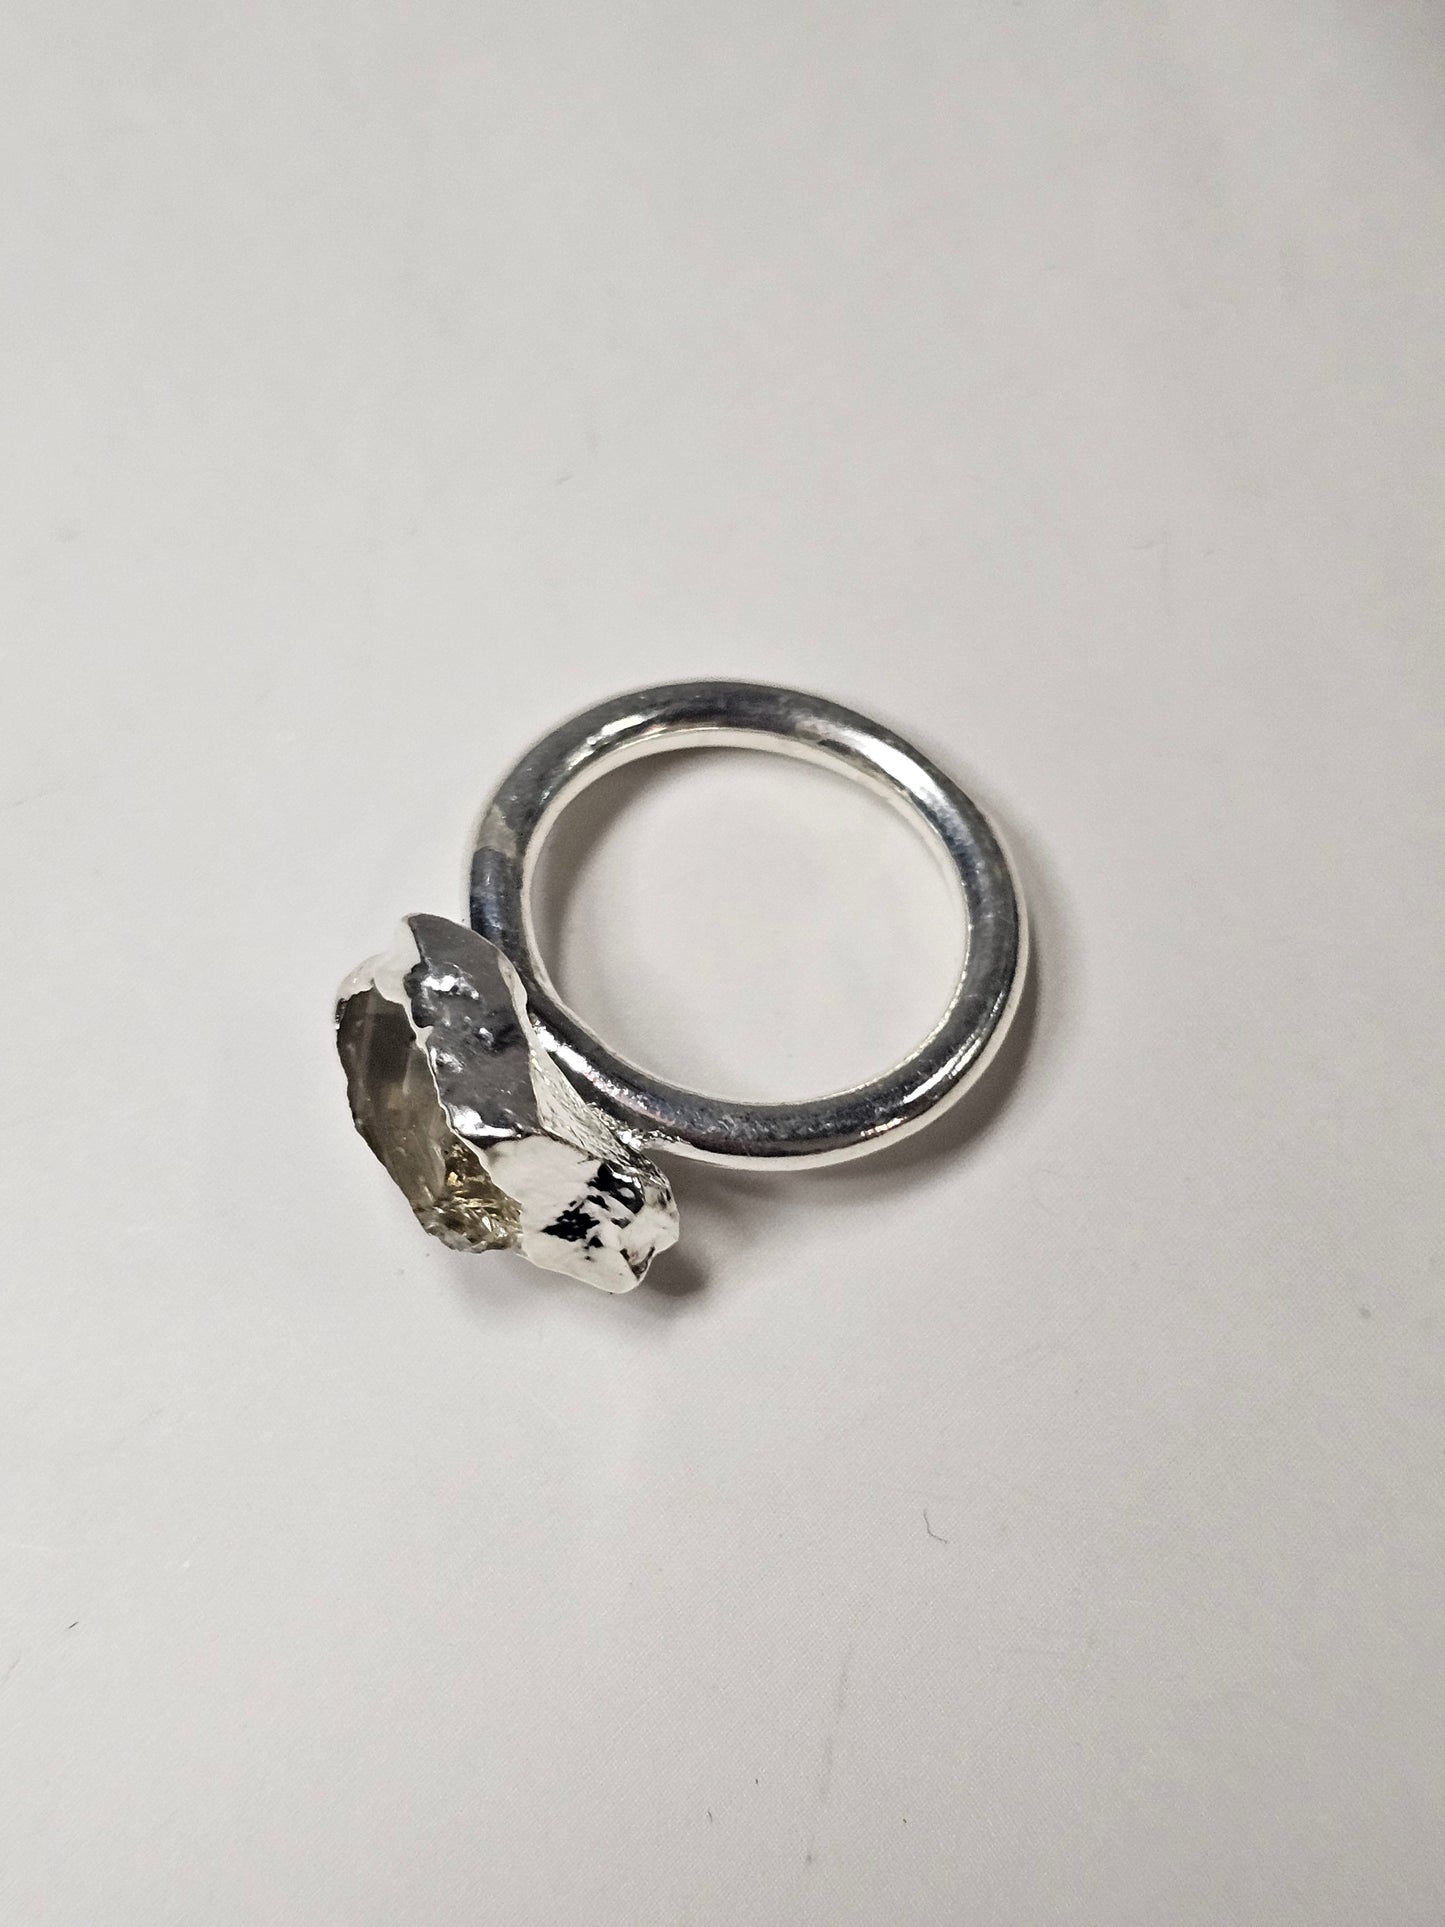 Rough Smokey Quartz Silver Plated Ring Size 4.25